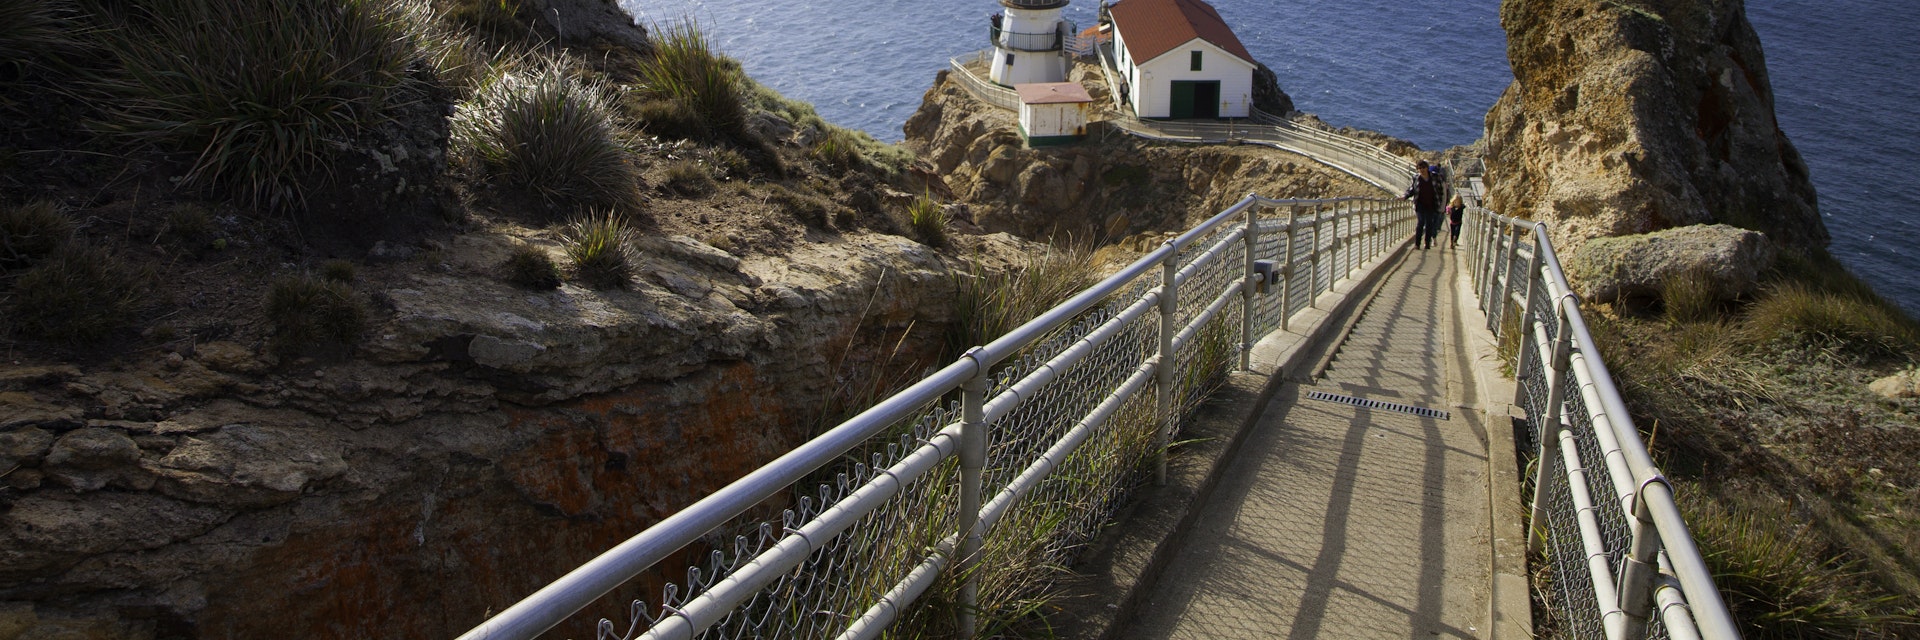 Point Reyes Lighthouse, California